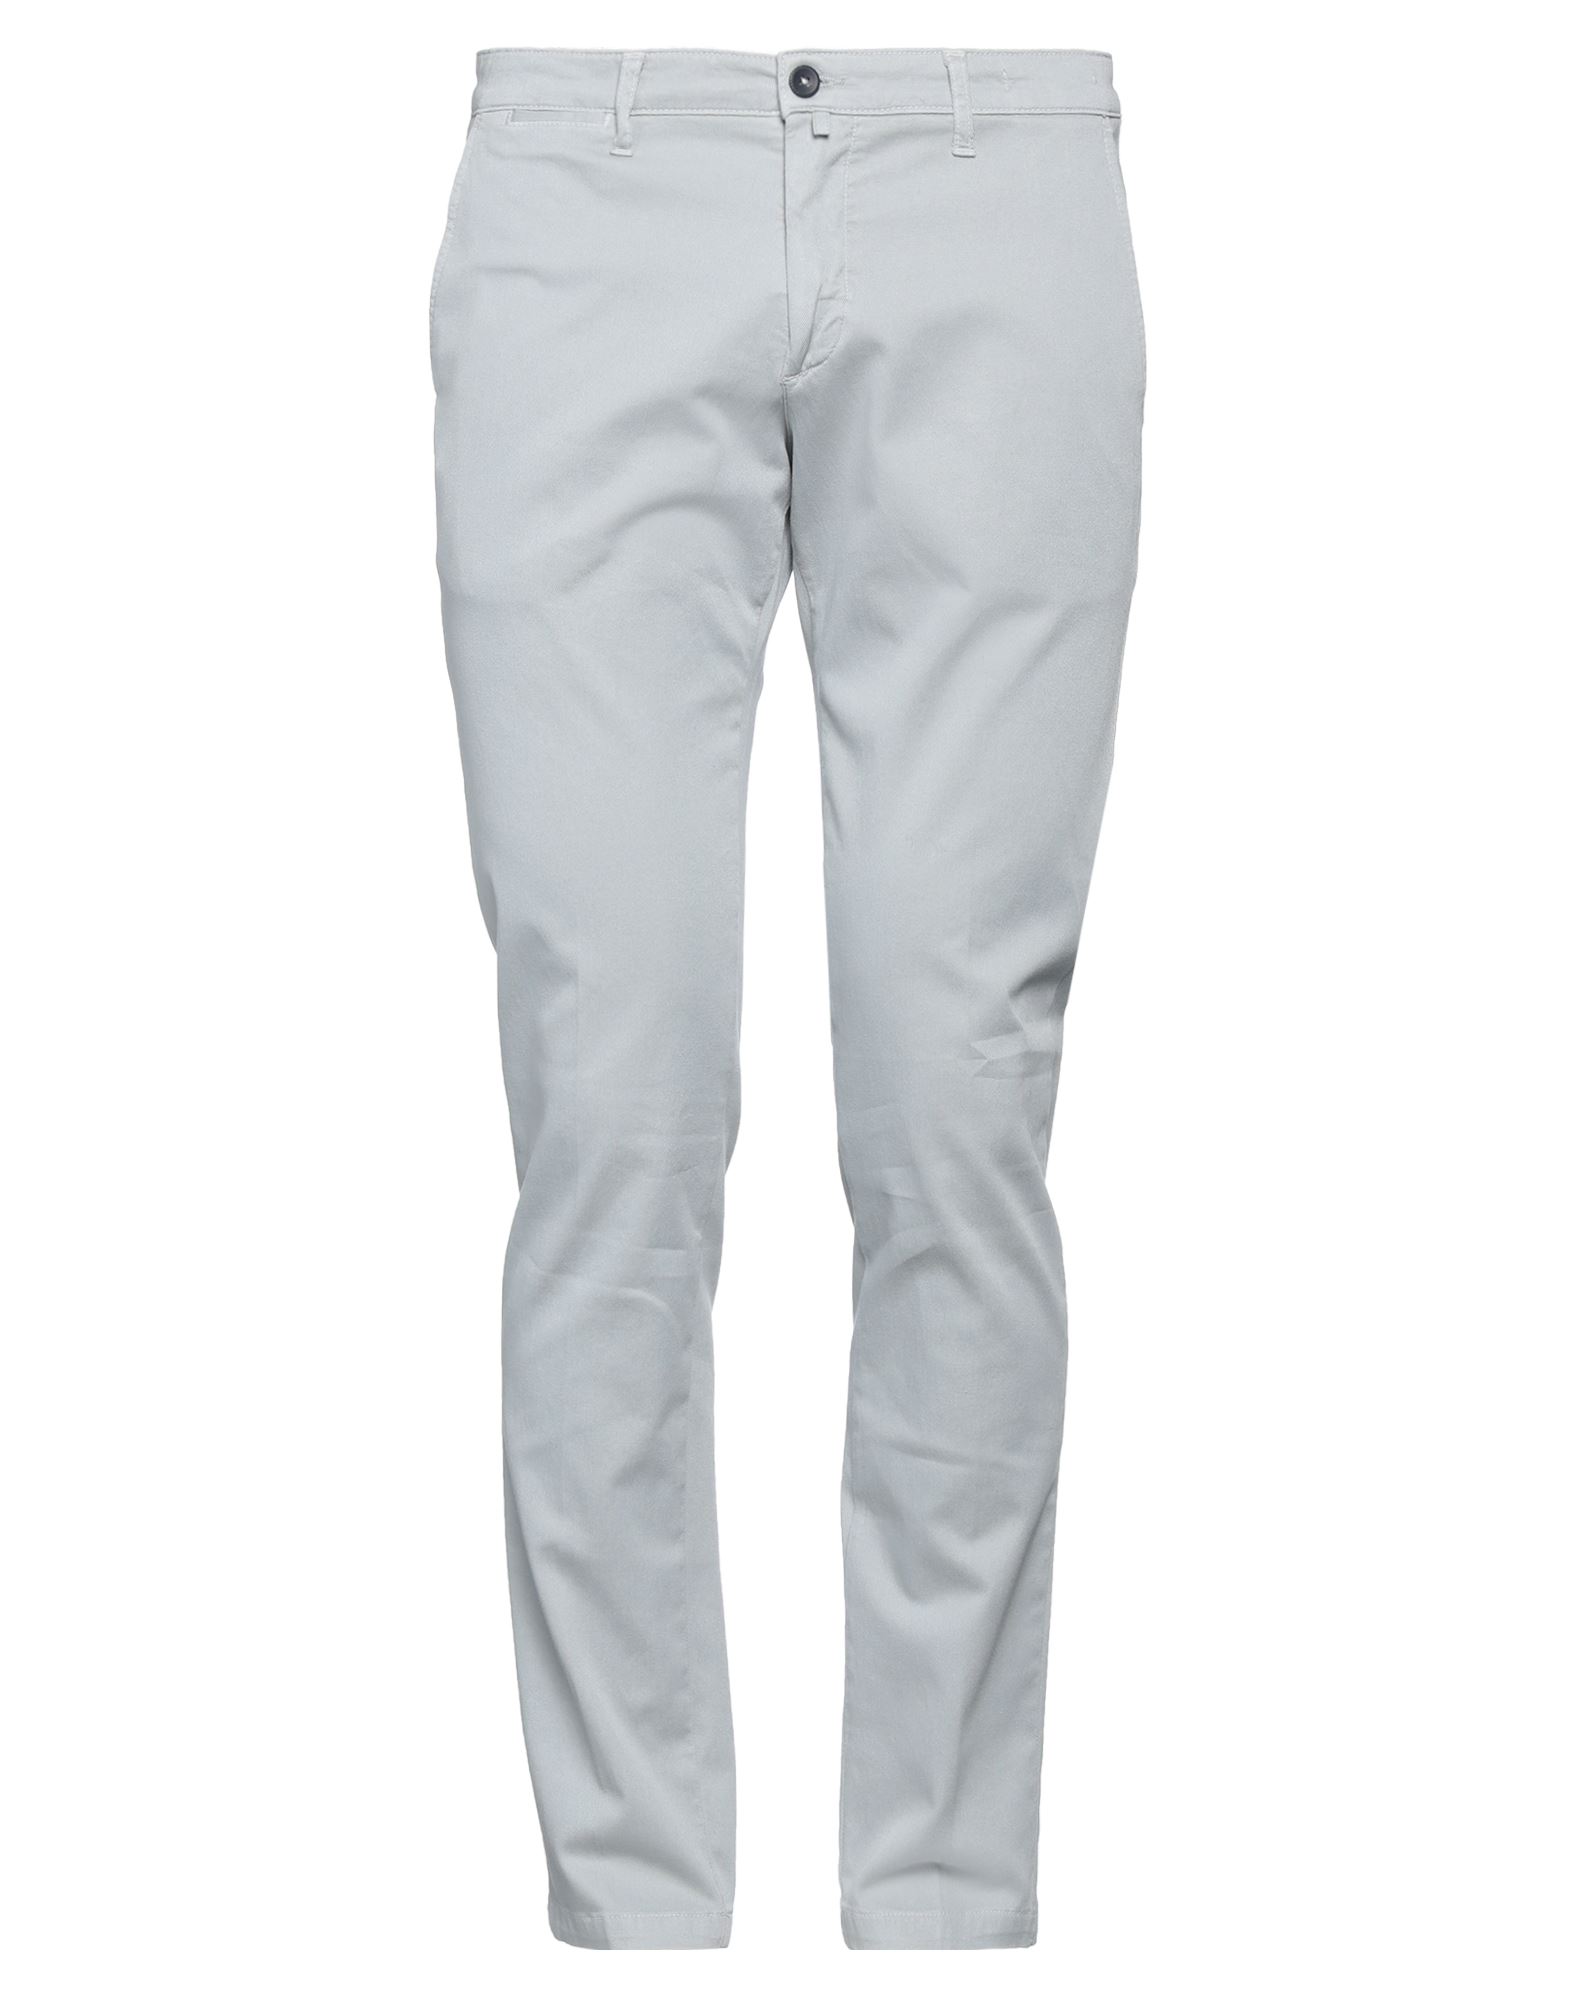 Asquani® Asquani Man Pants Light Grey Size 26 Cotton, Elastane